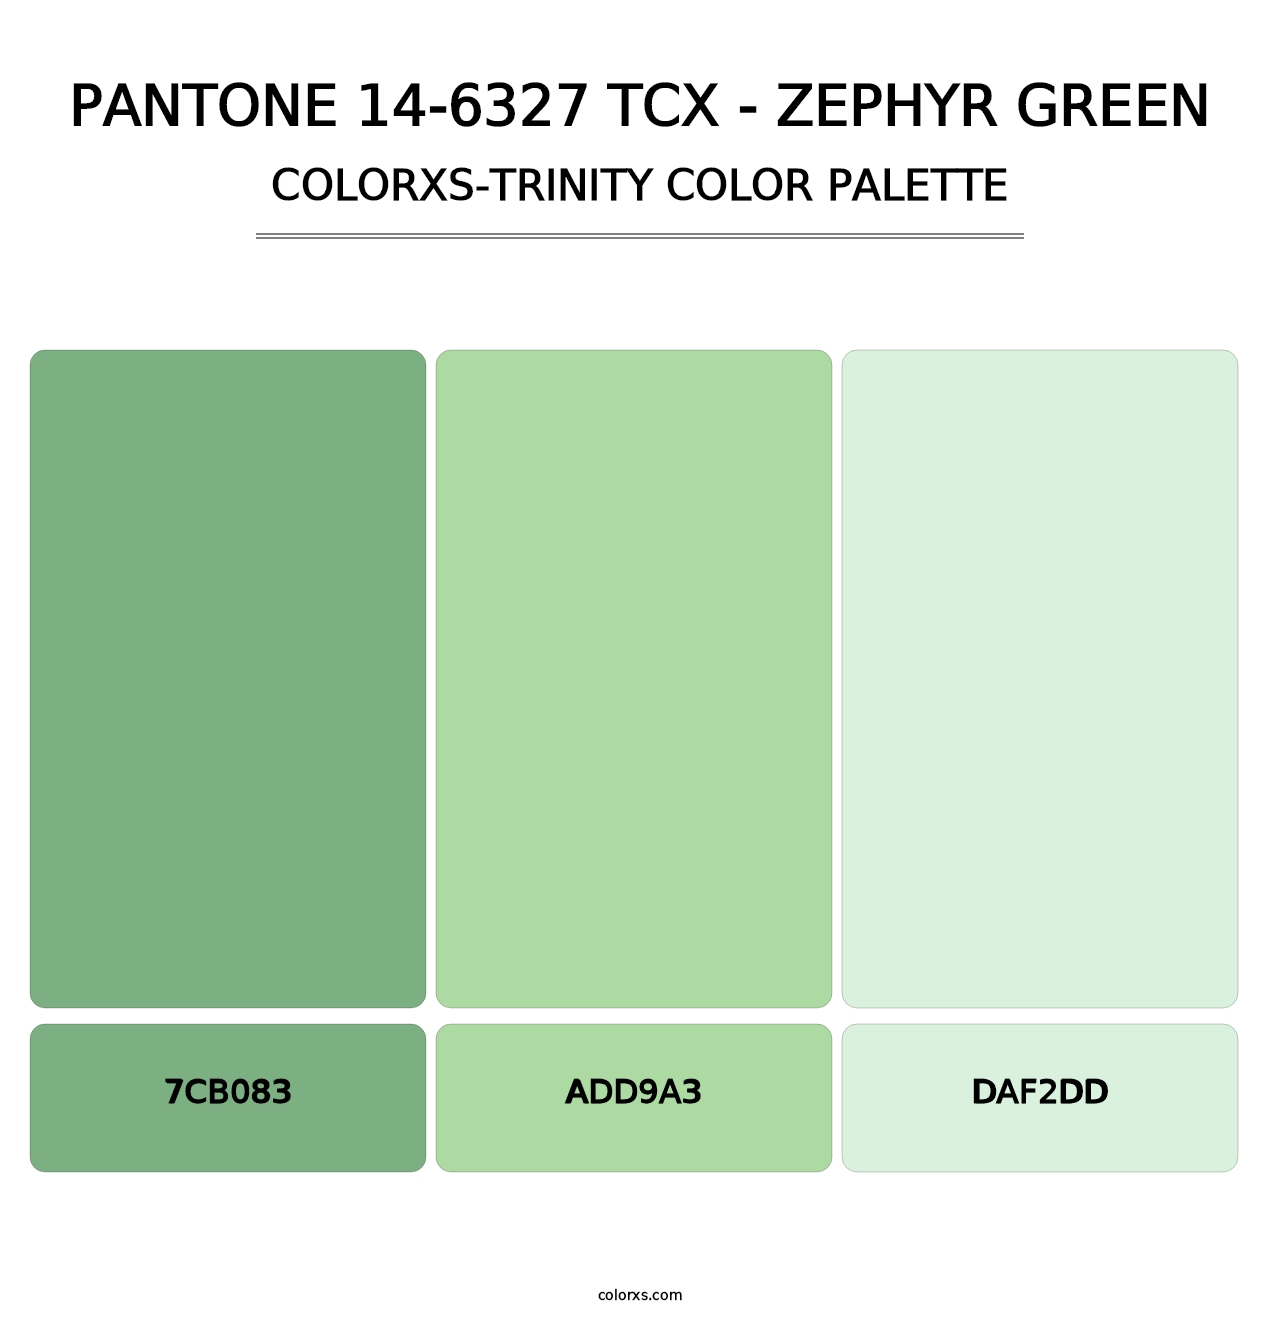 PANTONE 14-6327 TCX - Zephyr Green - Colorxs Trinity Palette